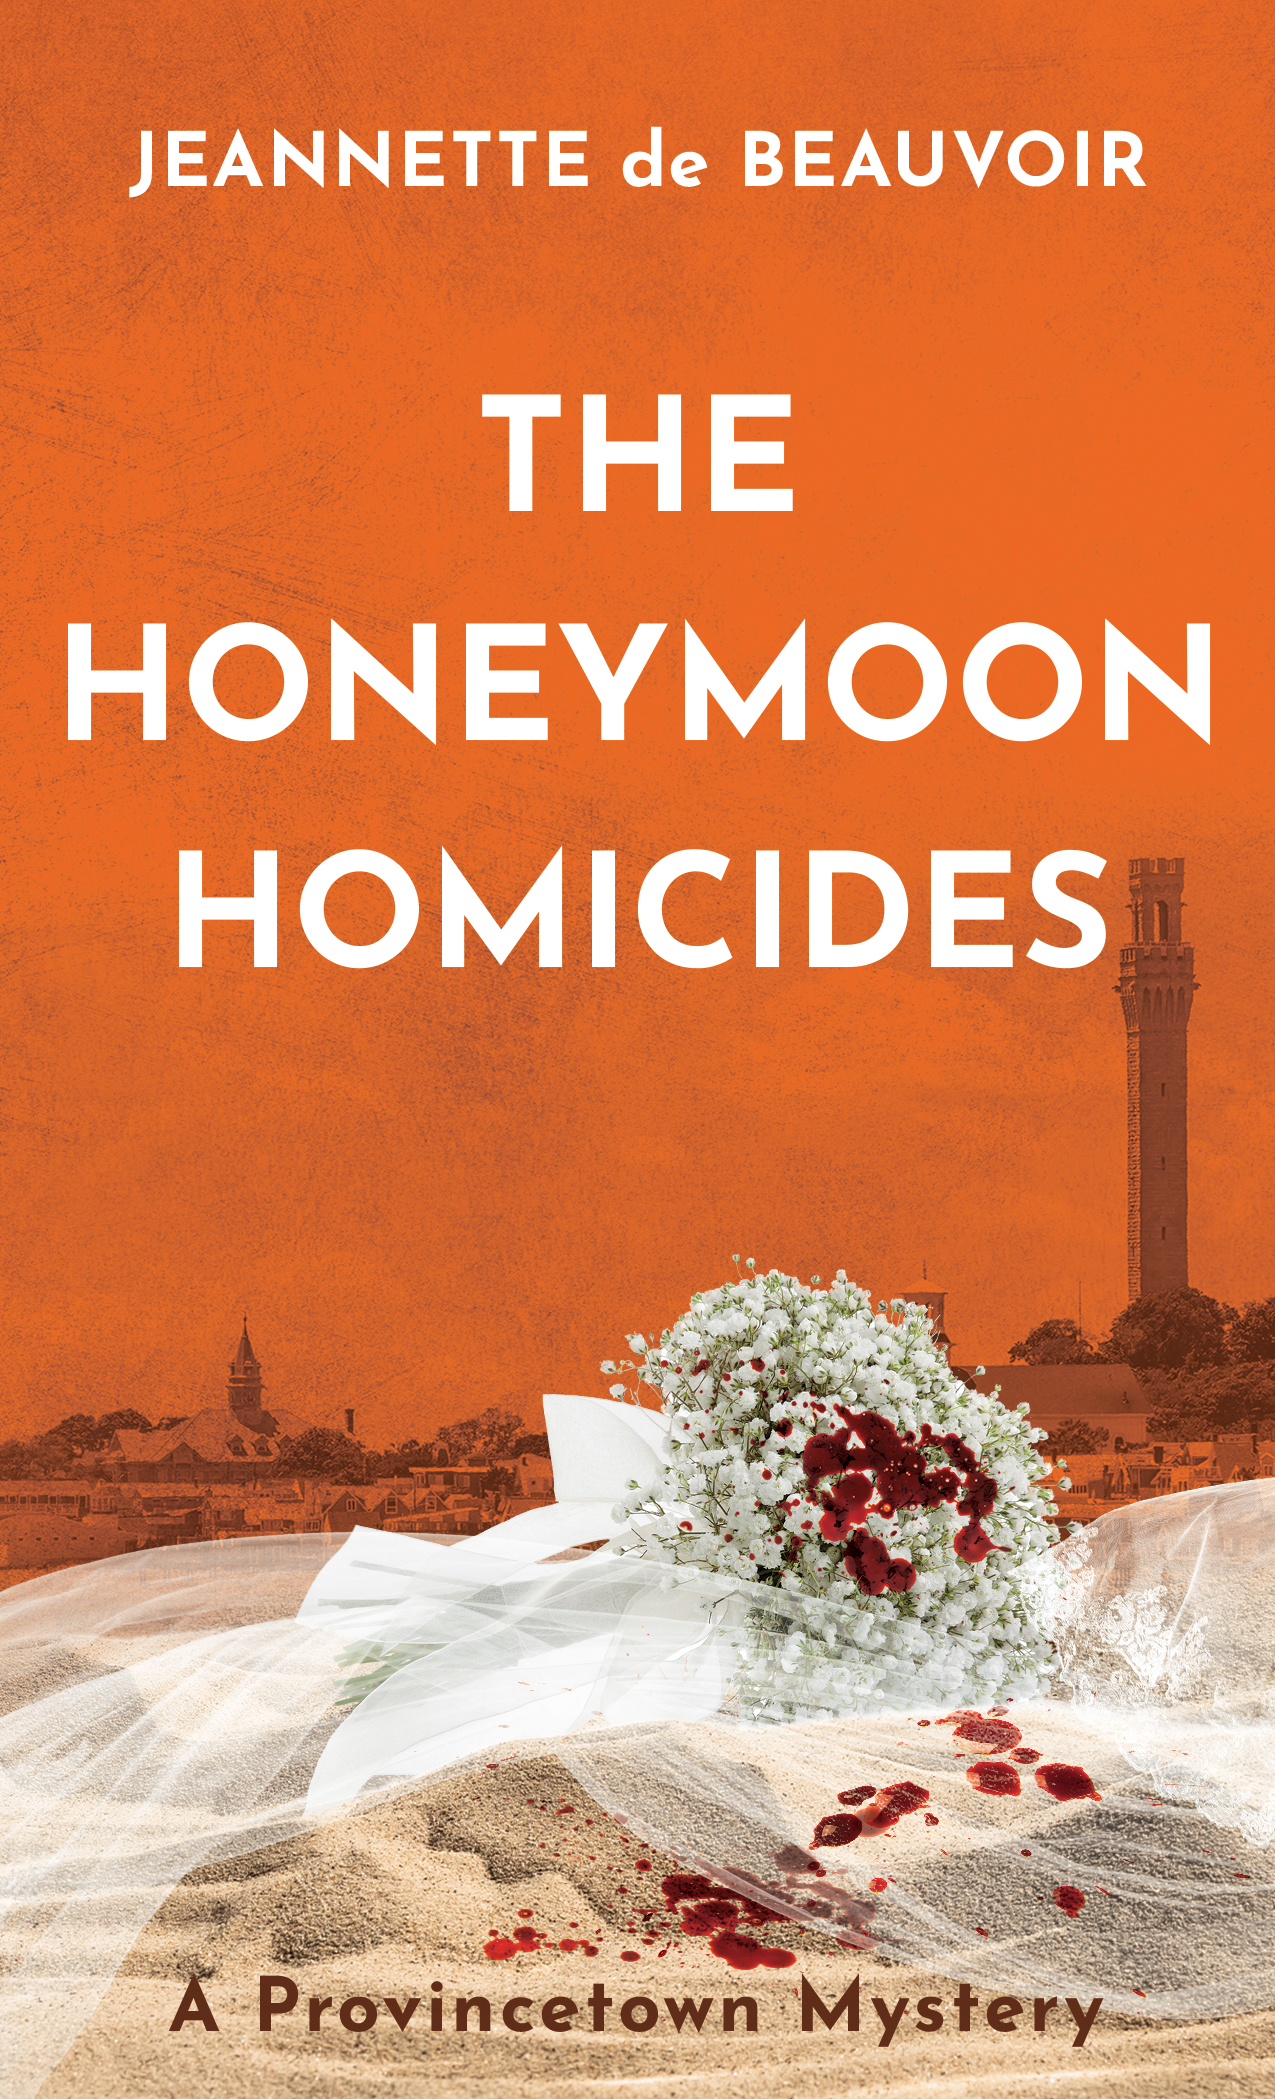 The Honeymoon Homicides by Jeannette de Beauvoir